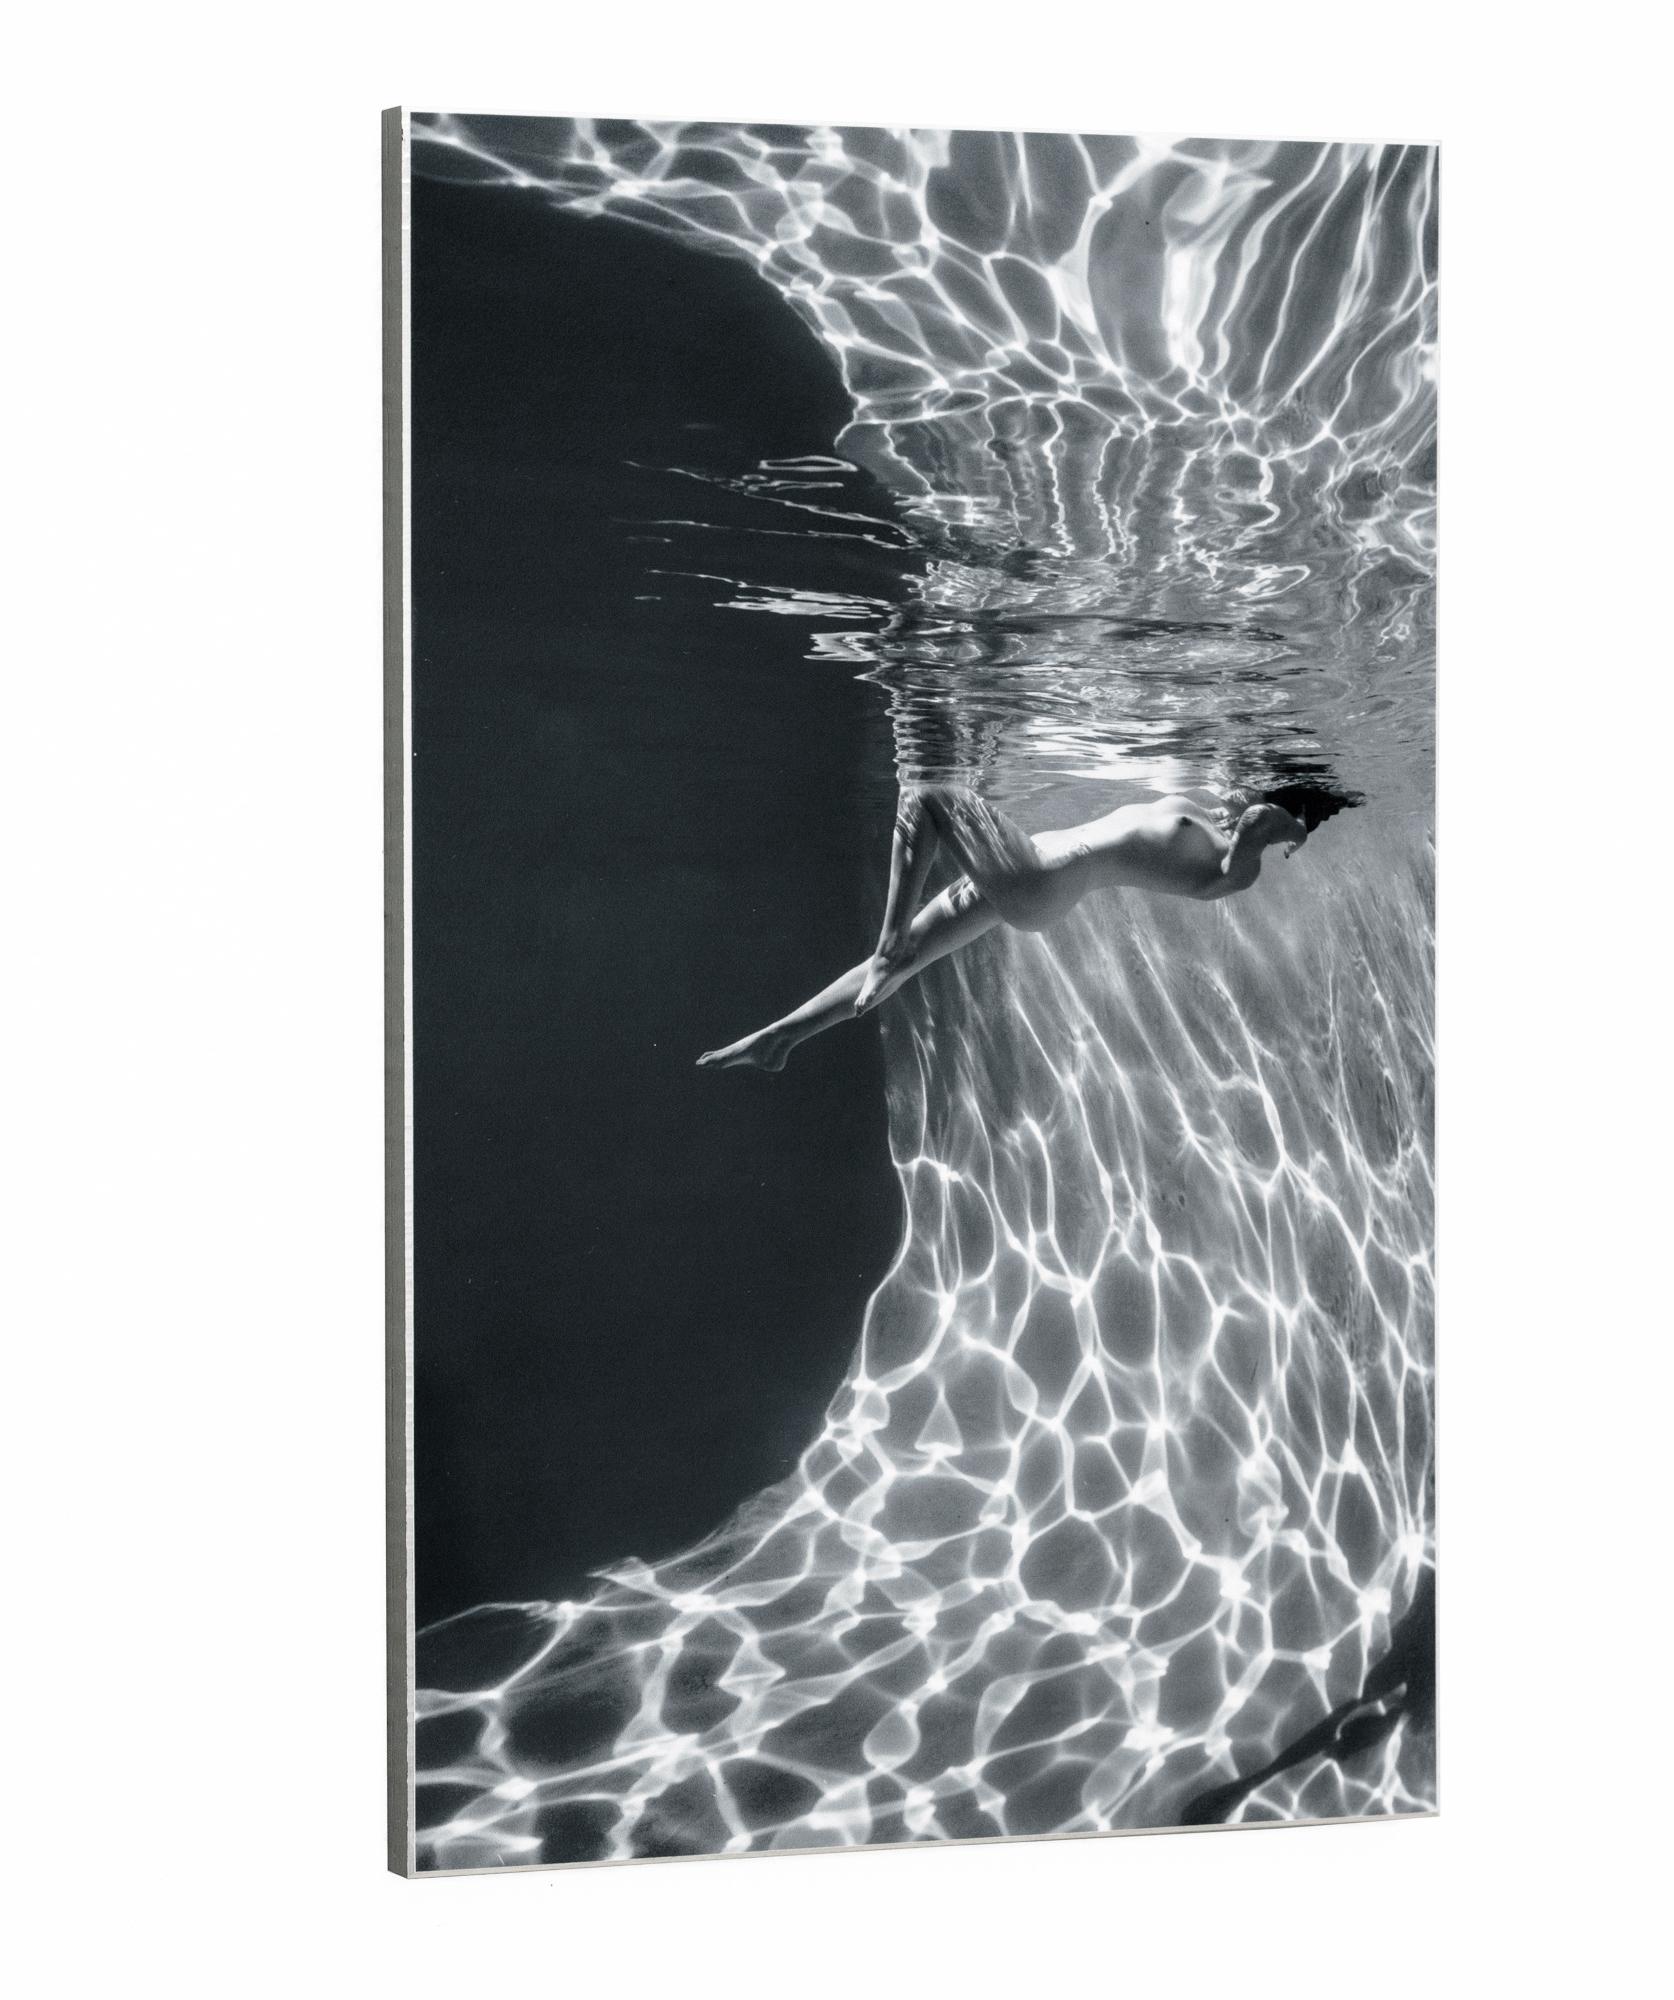 Marble Cave - underwater nude photo - print on aluminum 12 x 8